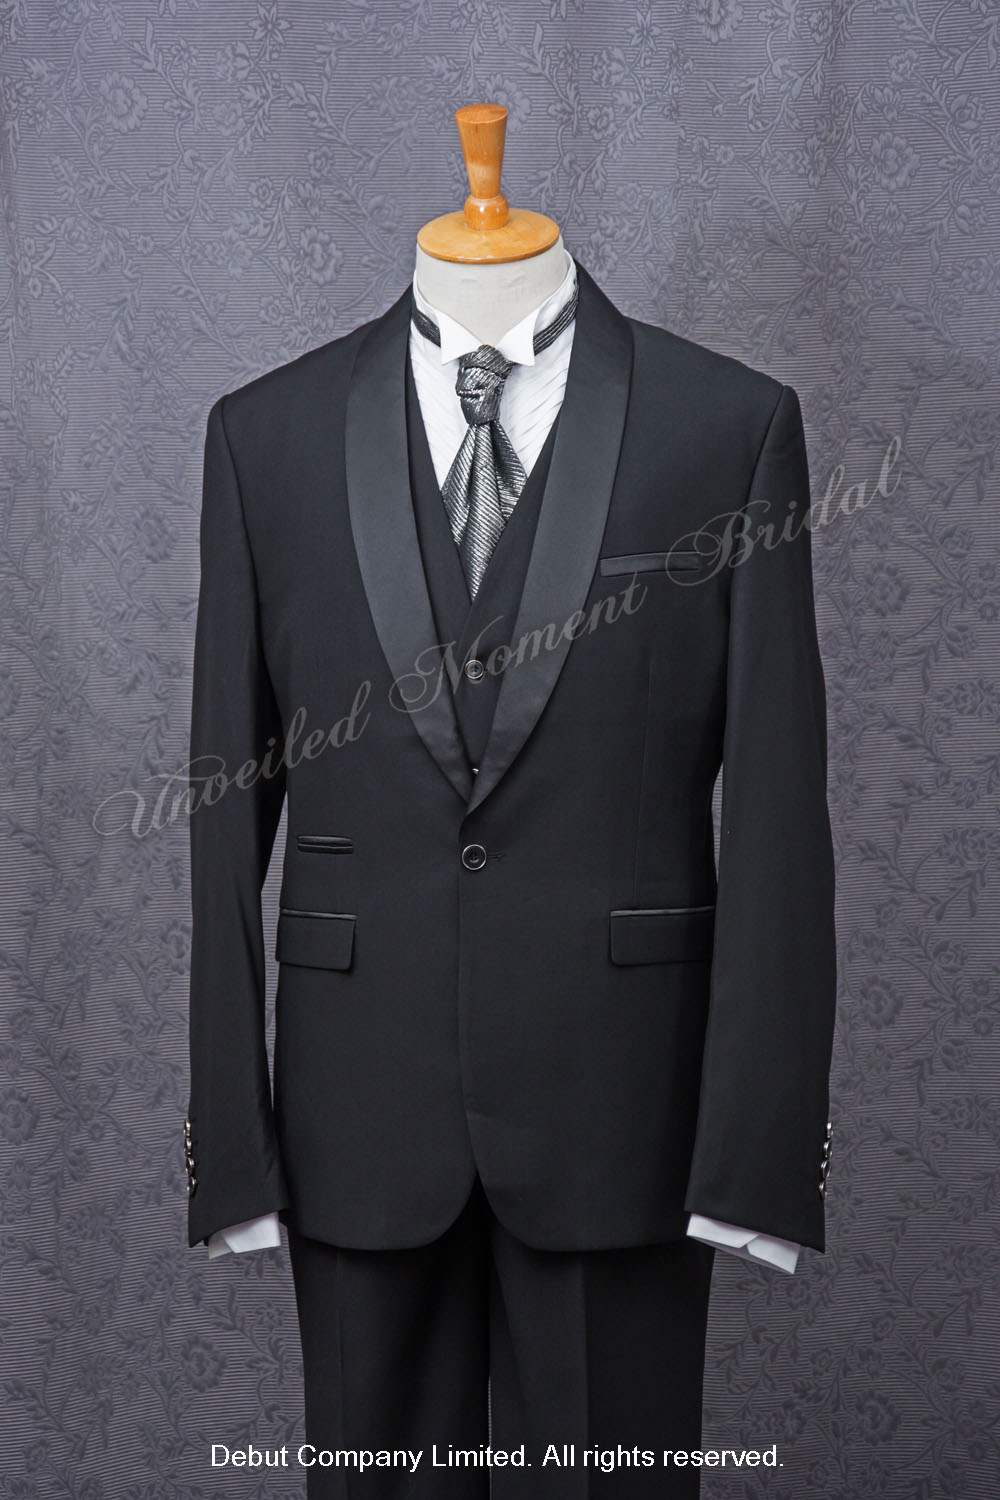 Black suit-style tuxedo with black collar, black waistcoat and silver euro-bow 銀灰色領結, 黑背心, 黑色披肩領, 西裝款黑色新郎禮服